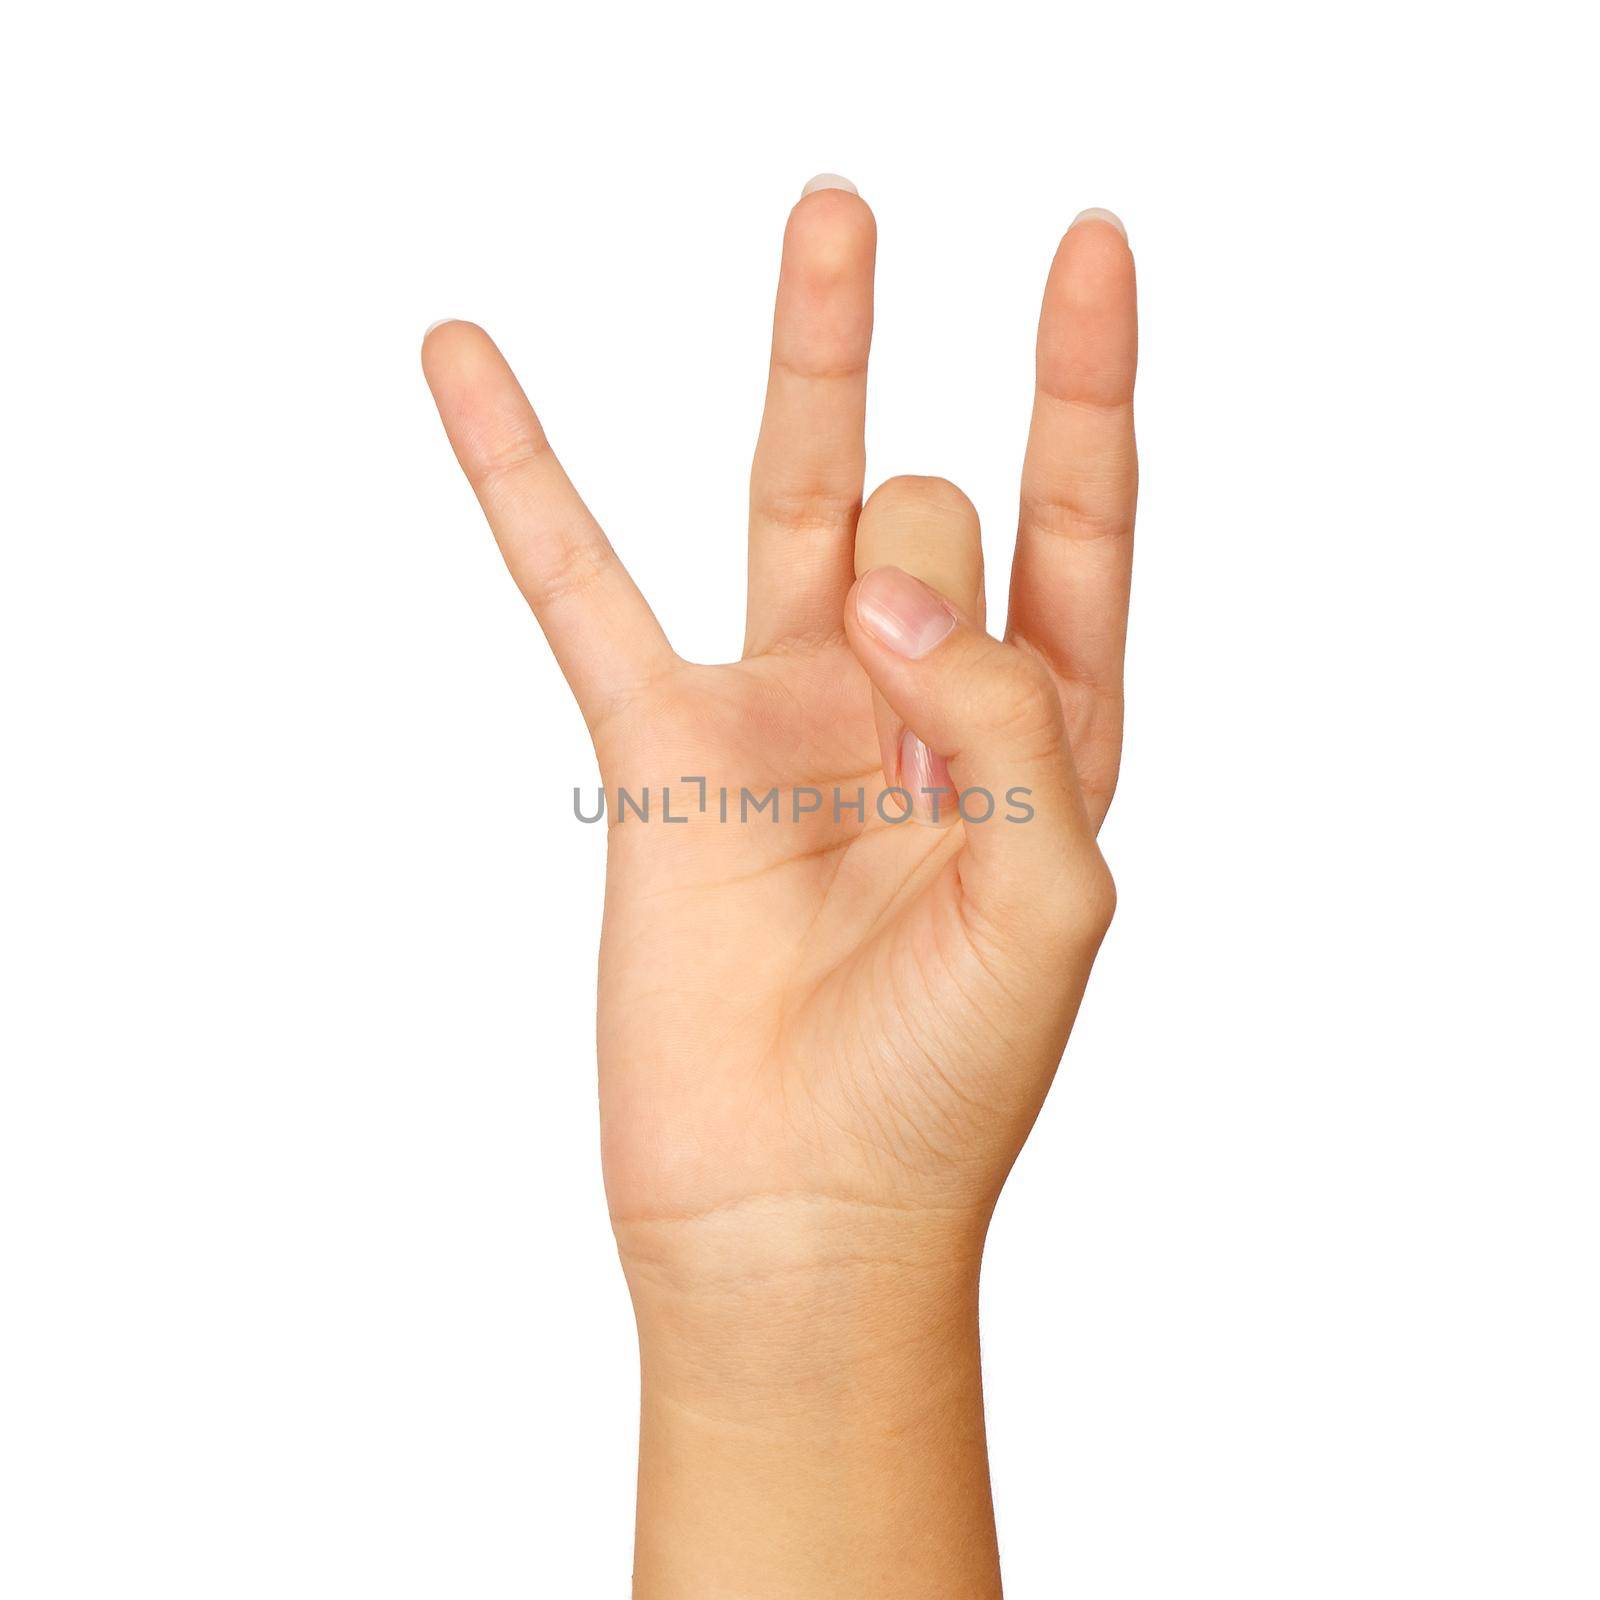 american sign language number 8 by raddnatt